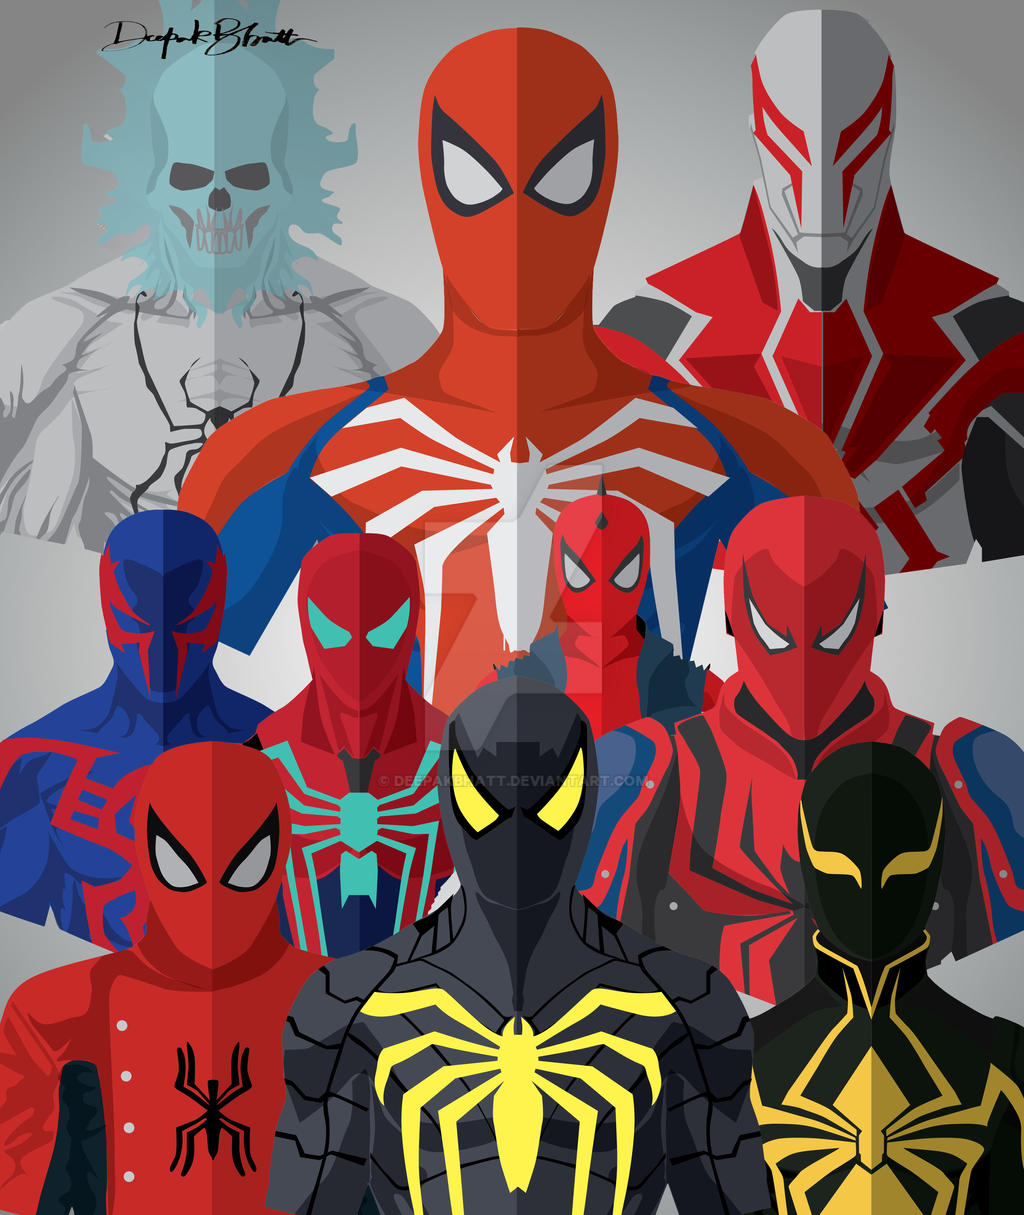 Spiderman ps4 suits by DeepakBhatt on DeviantArt